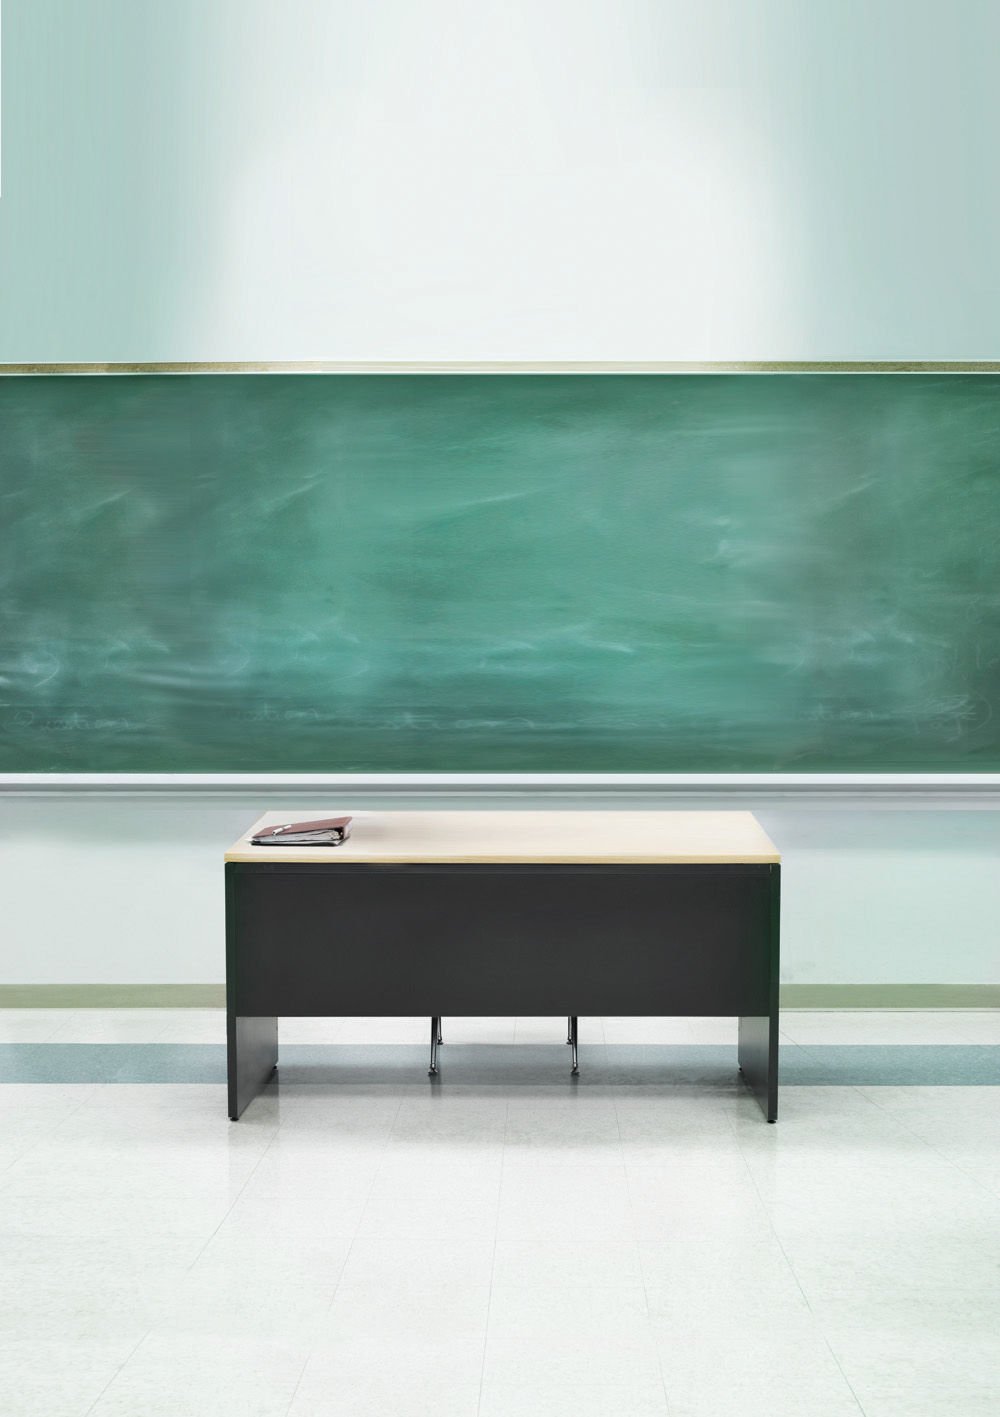 Resultado de imagen de empty teachers desk